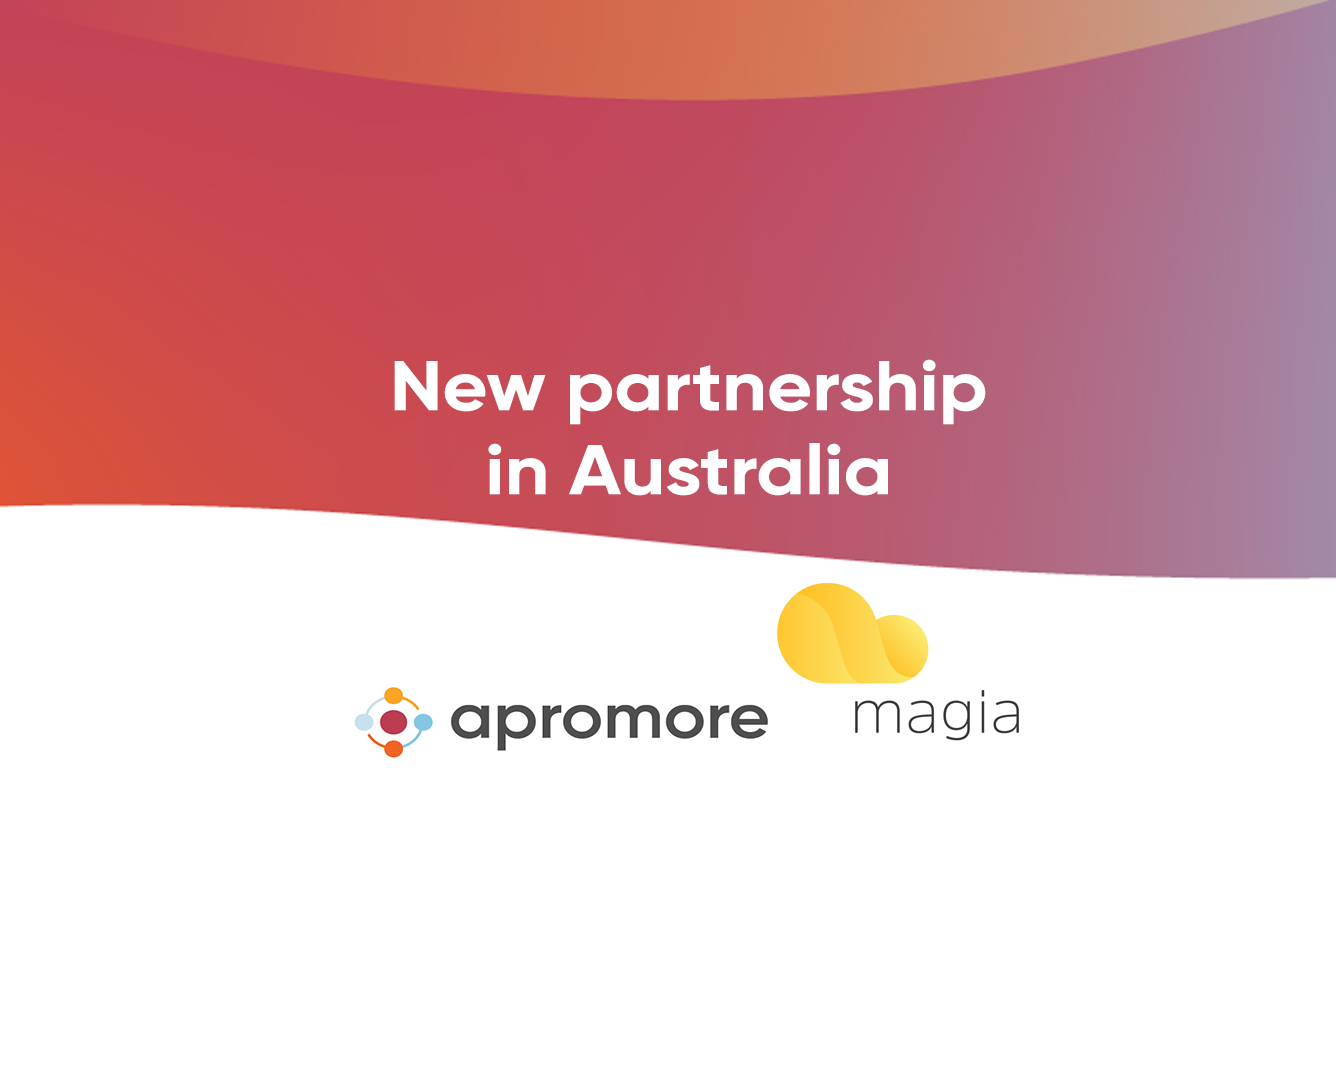 Apromore’s New Partnership in Australia